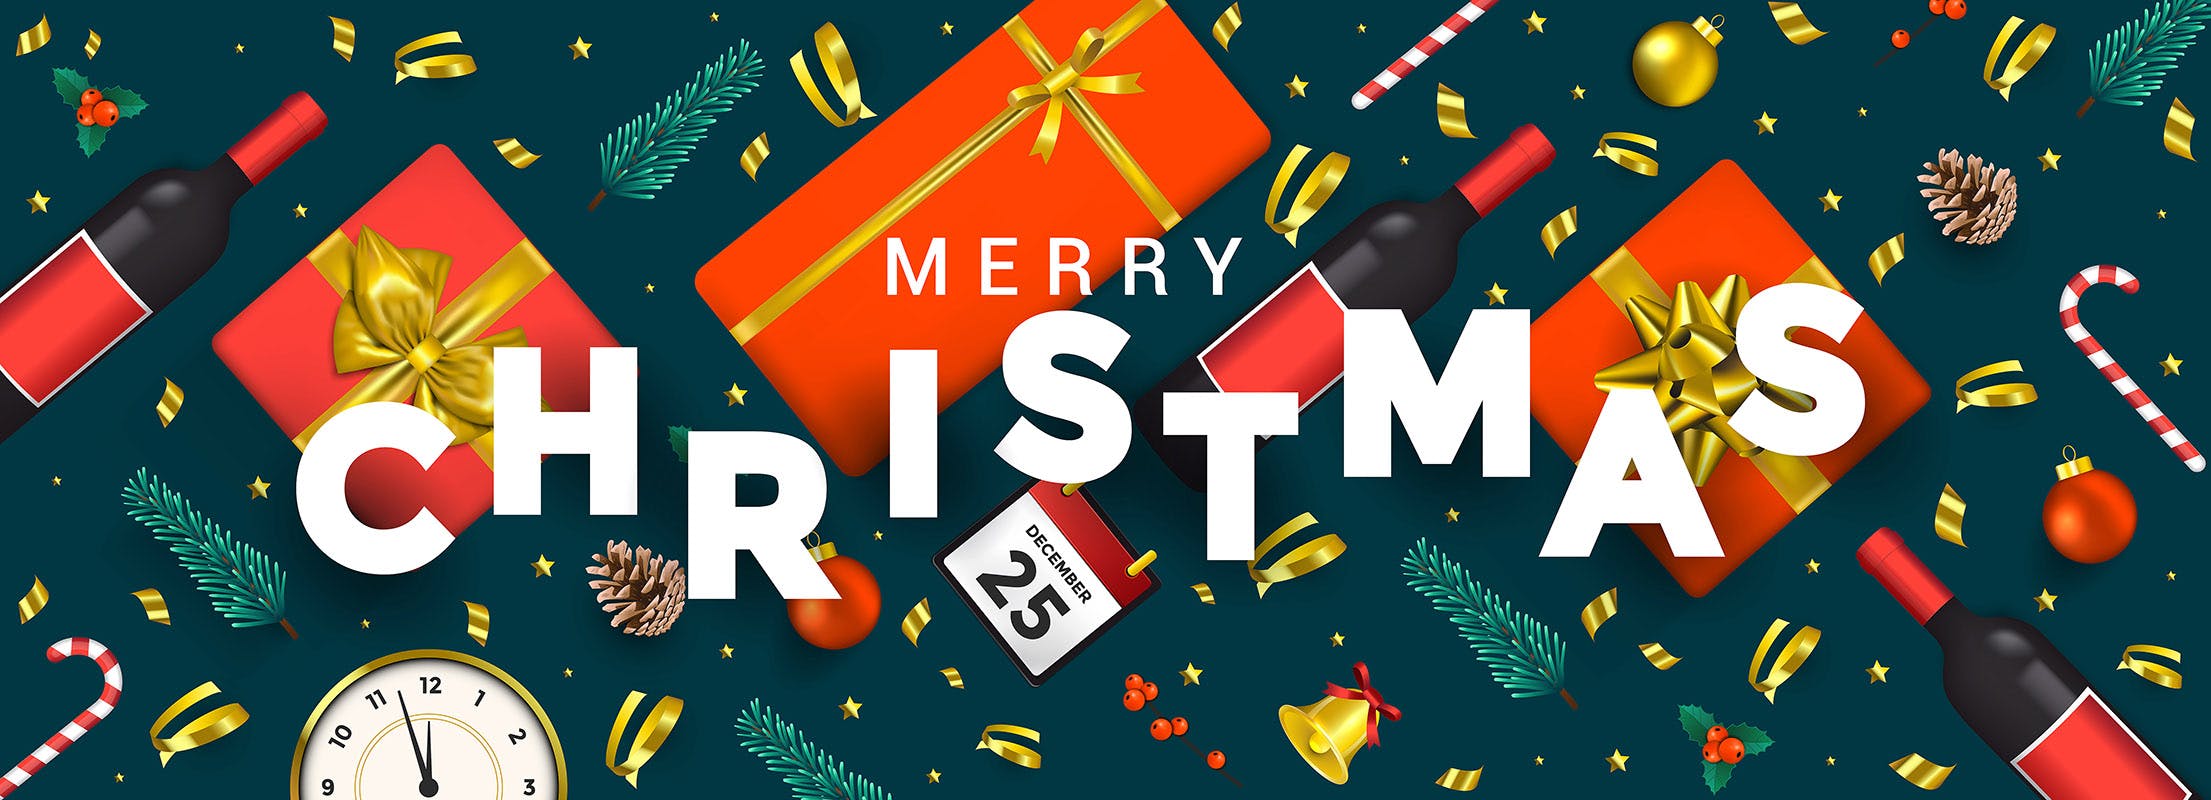 圣诞节&新年祝福主题贺卡设计模板v2 Merry Christmas and Happy New Year greeting cards插图(4)